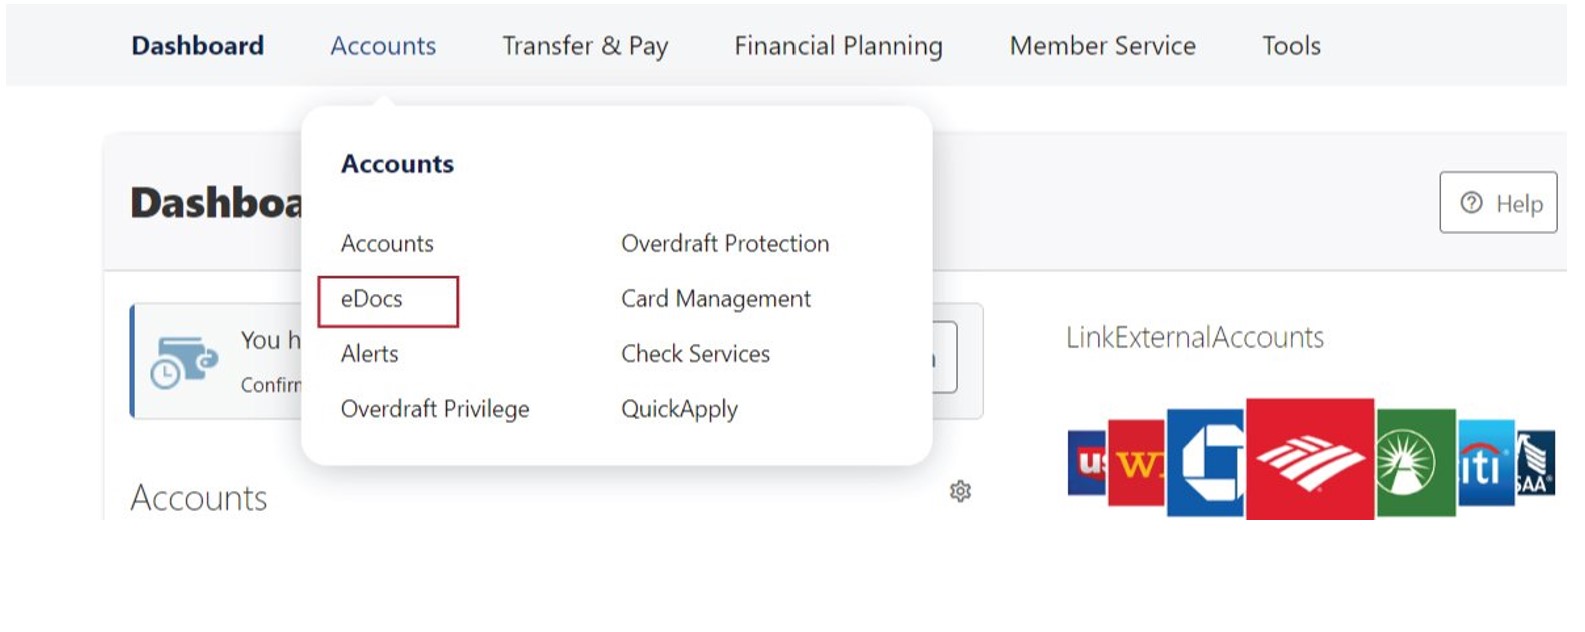 Access the Digital Banking ACCOUNTS menu and choose the ALERTS option.